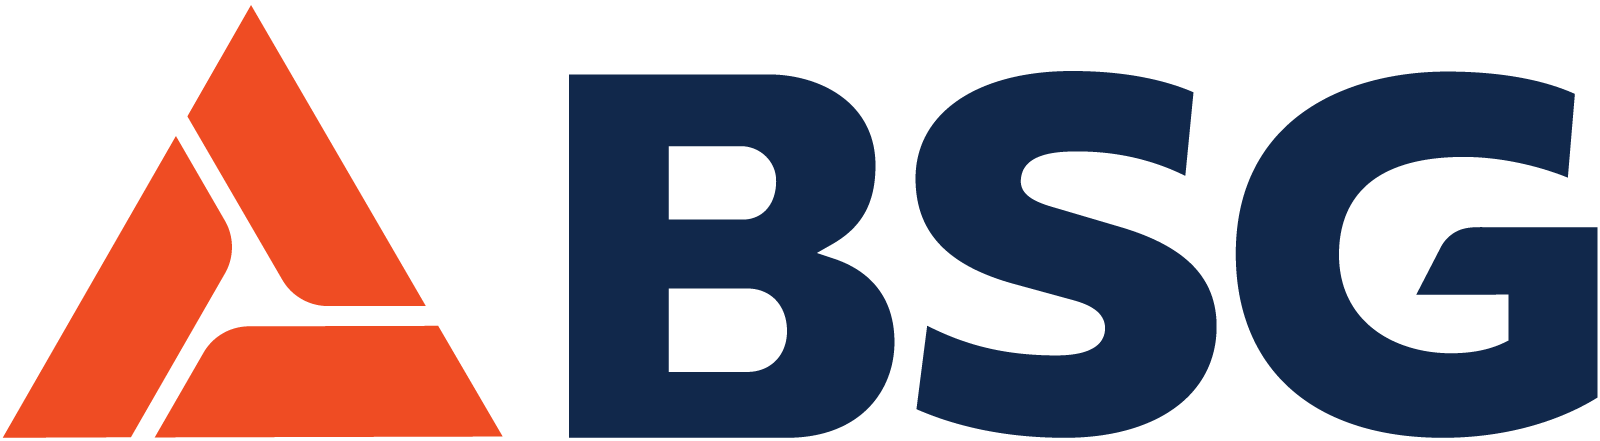 BSG Canada logo.png